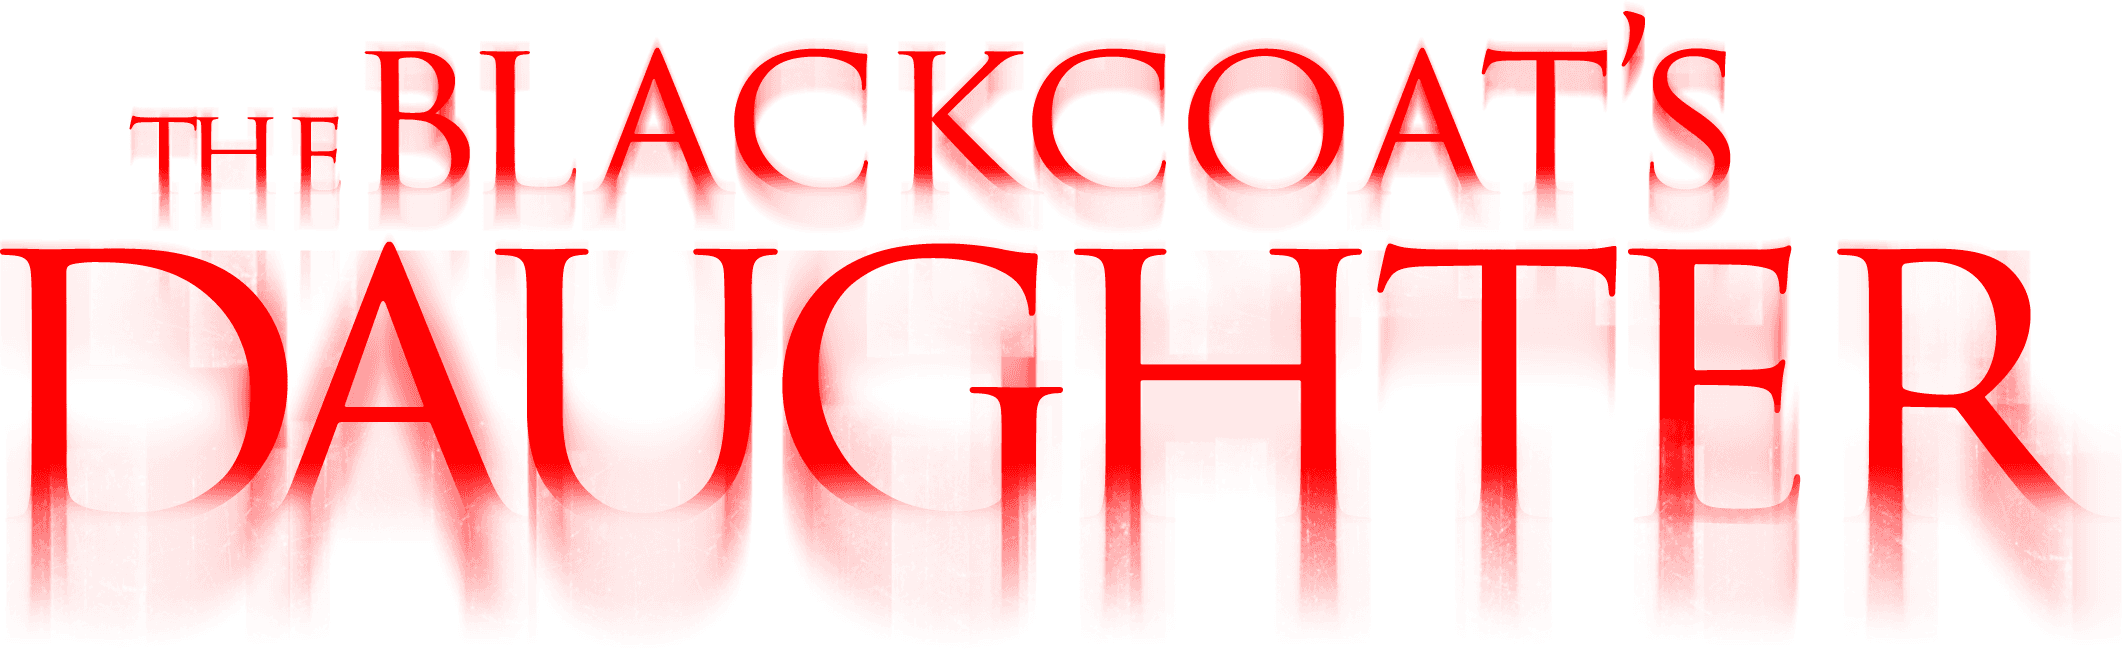 The Blackcoat's Daughter logo